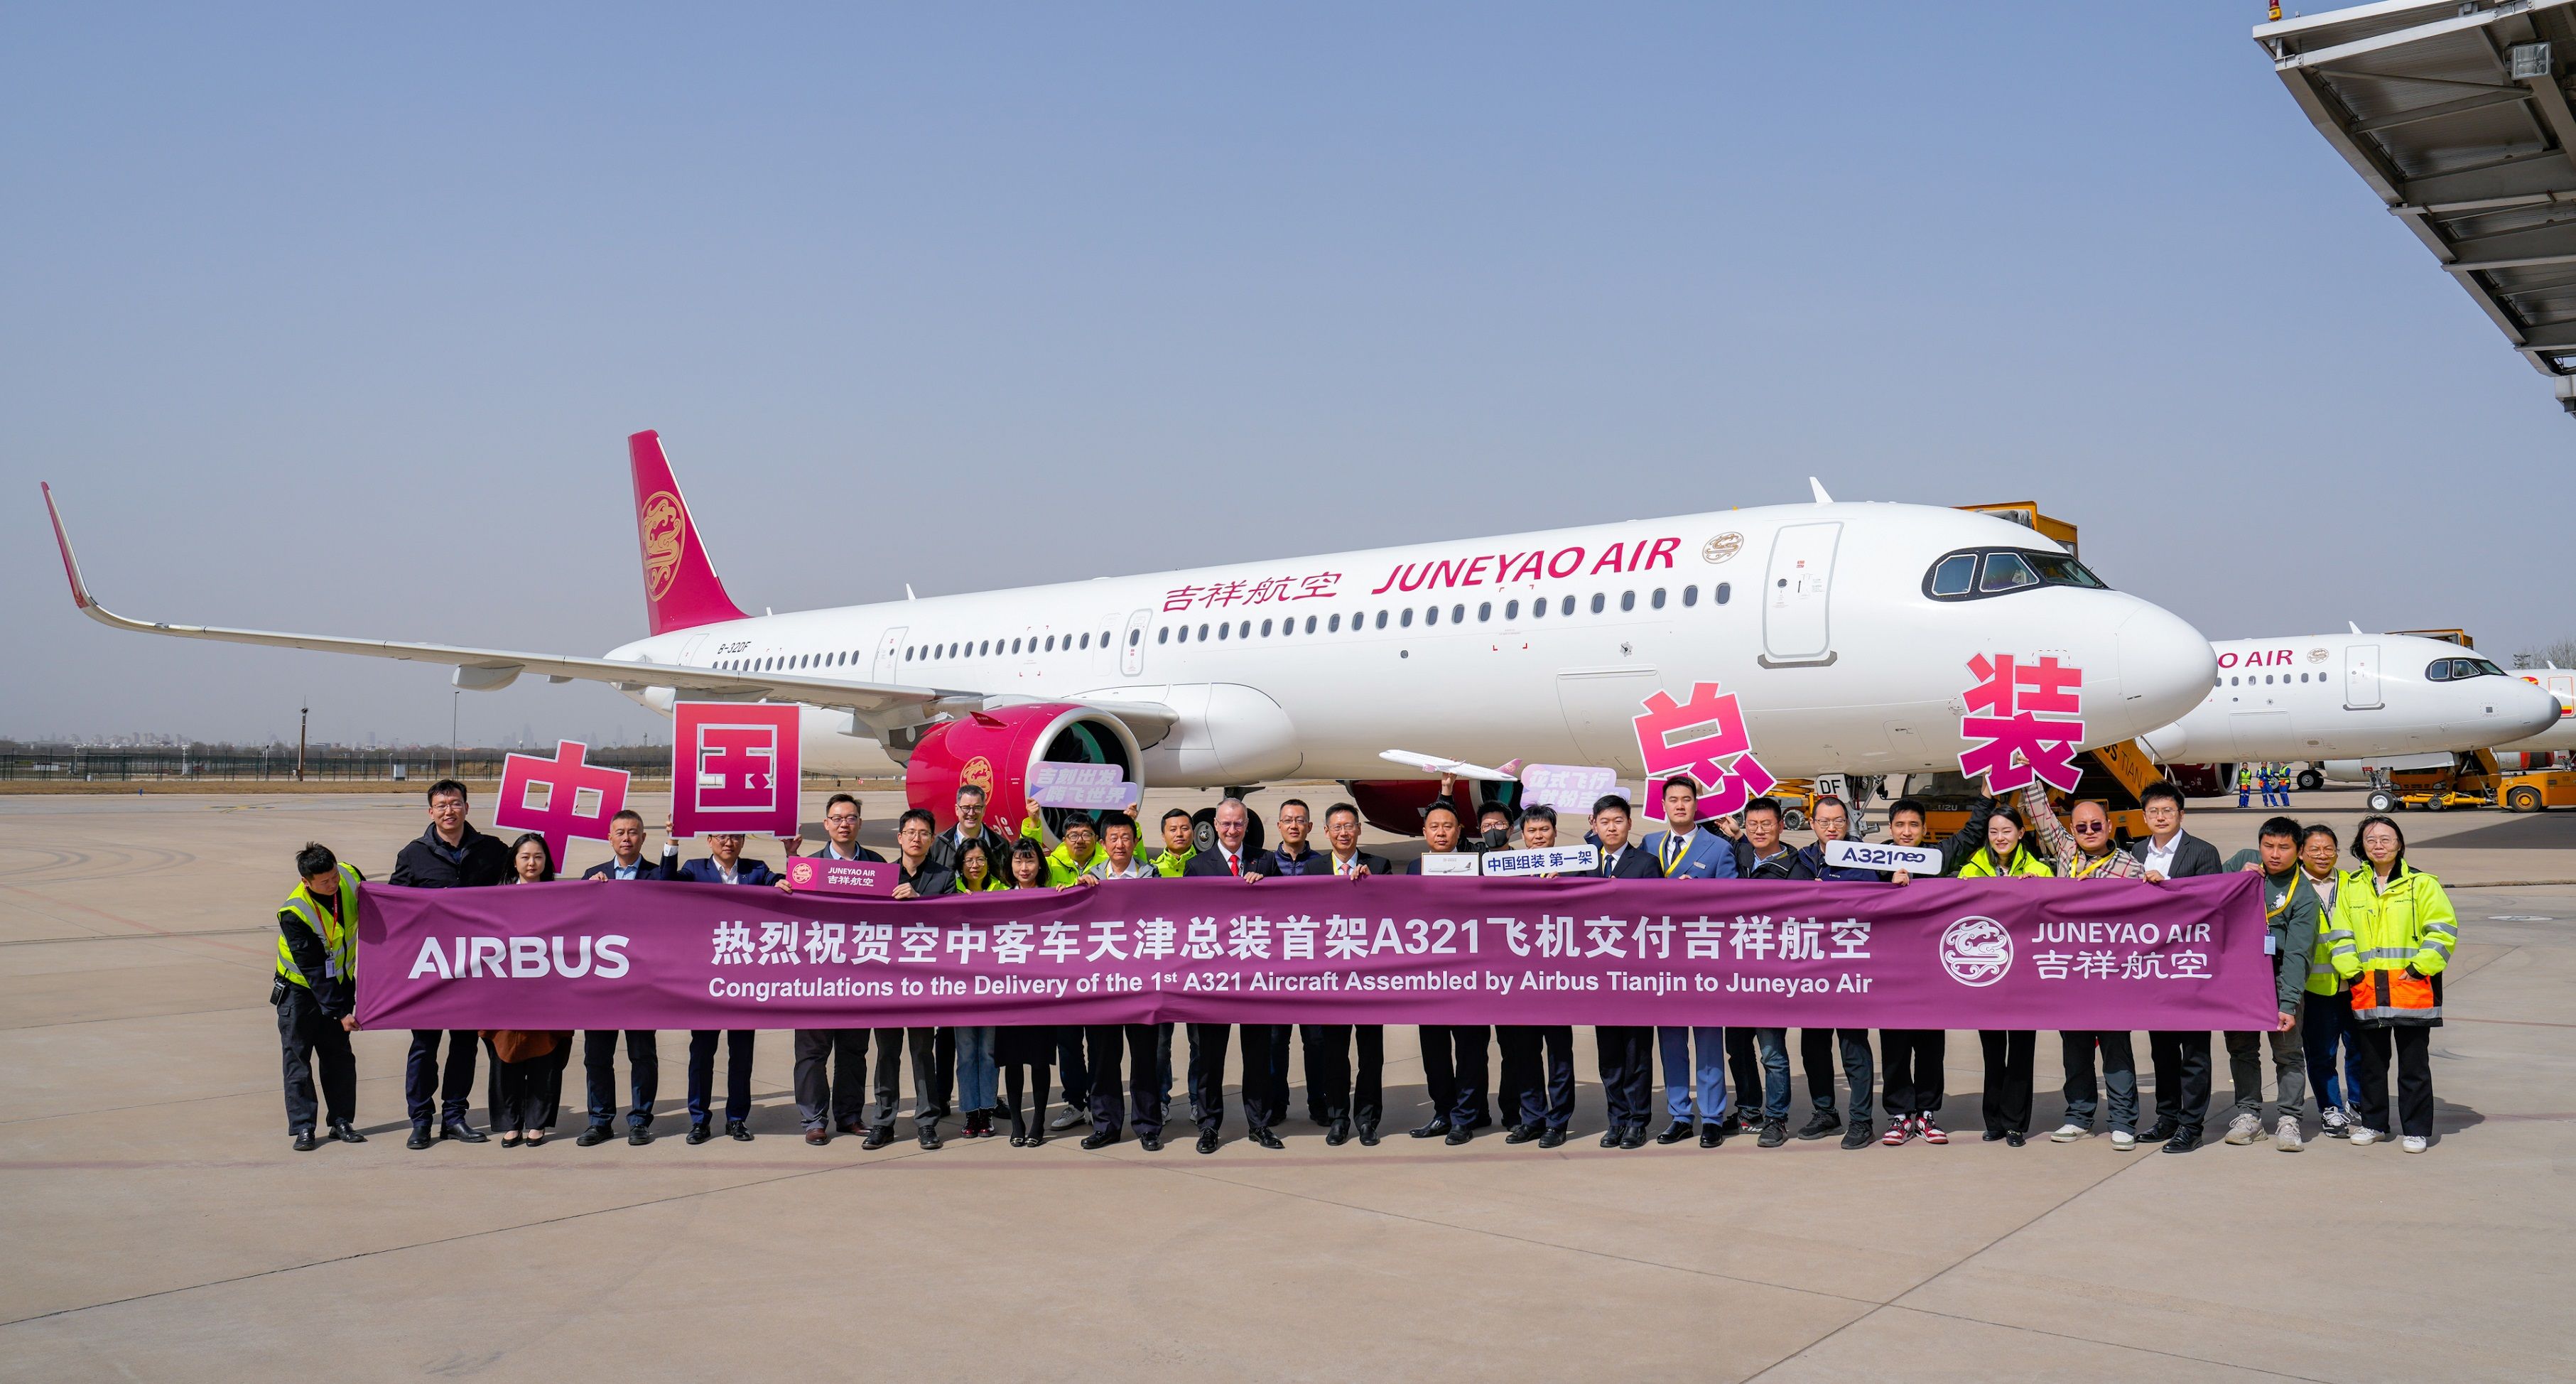 Airbus A321neo Tianjin